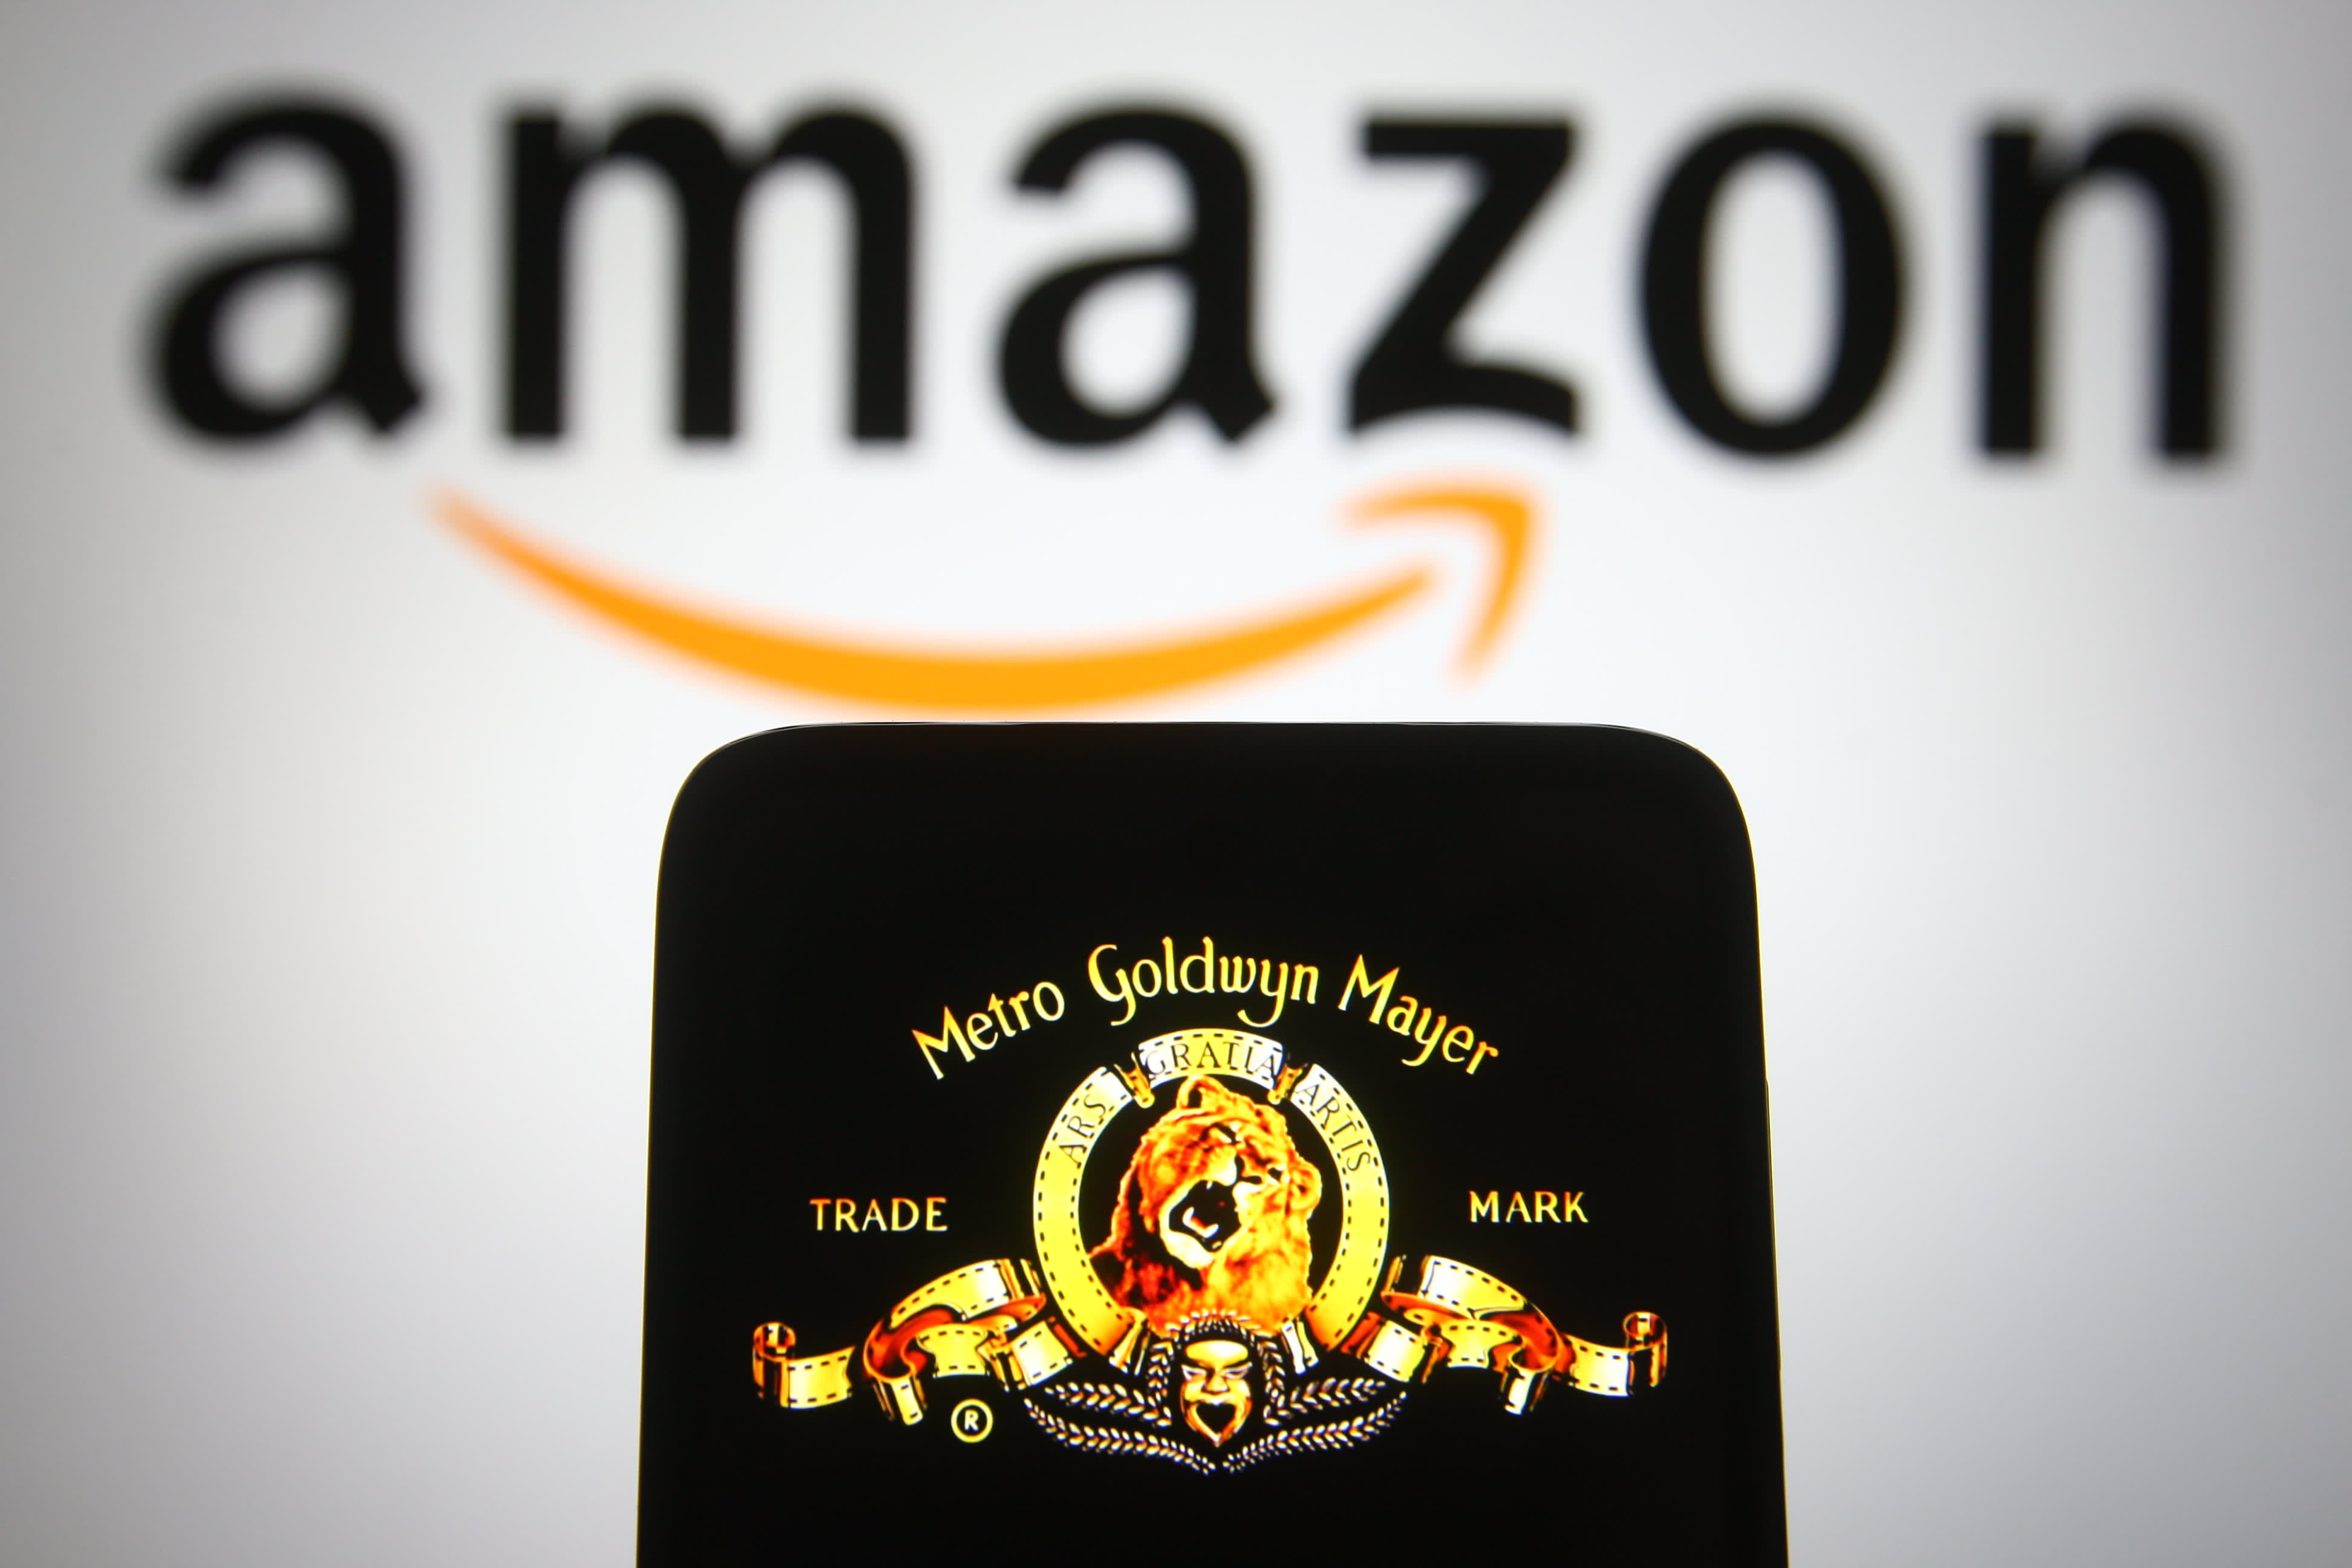 Amazon to buy MGM Studios for $8.45 billion